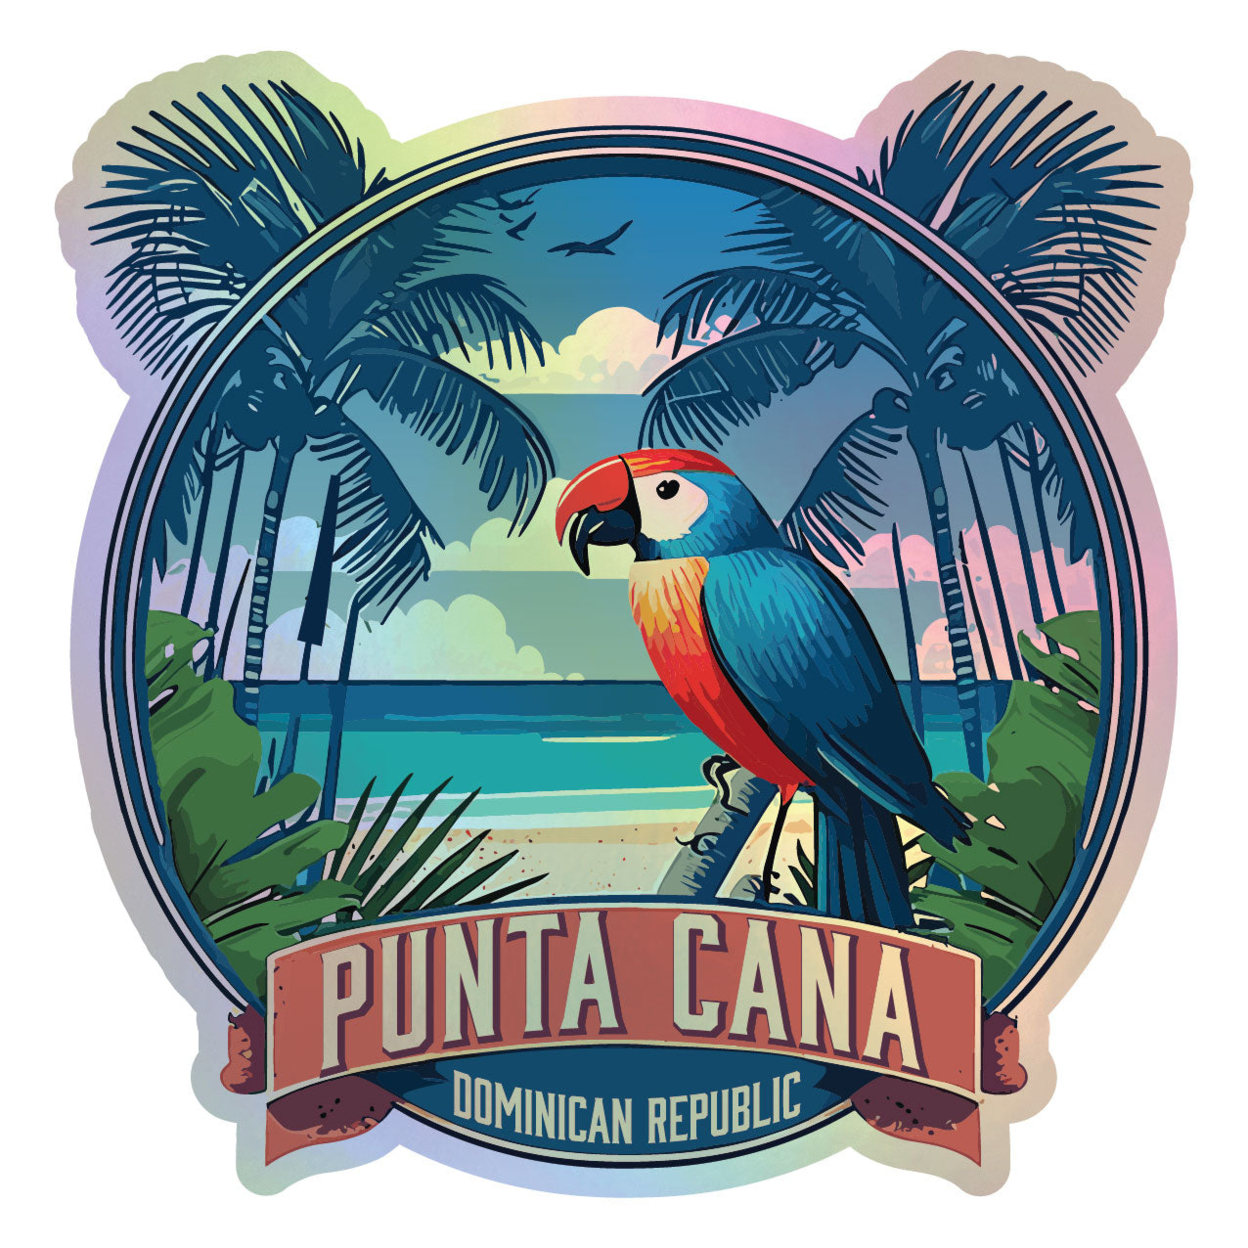 Punta Cana Dominican Republic Holographic Souvenir Vinyl Decal Sticker Parrot Design - 3 Inch